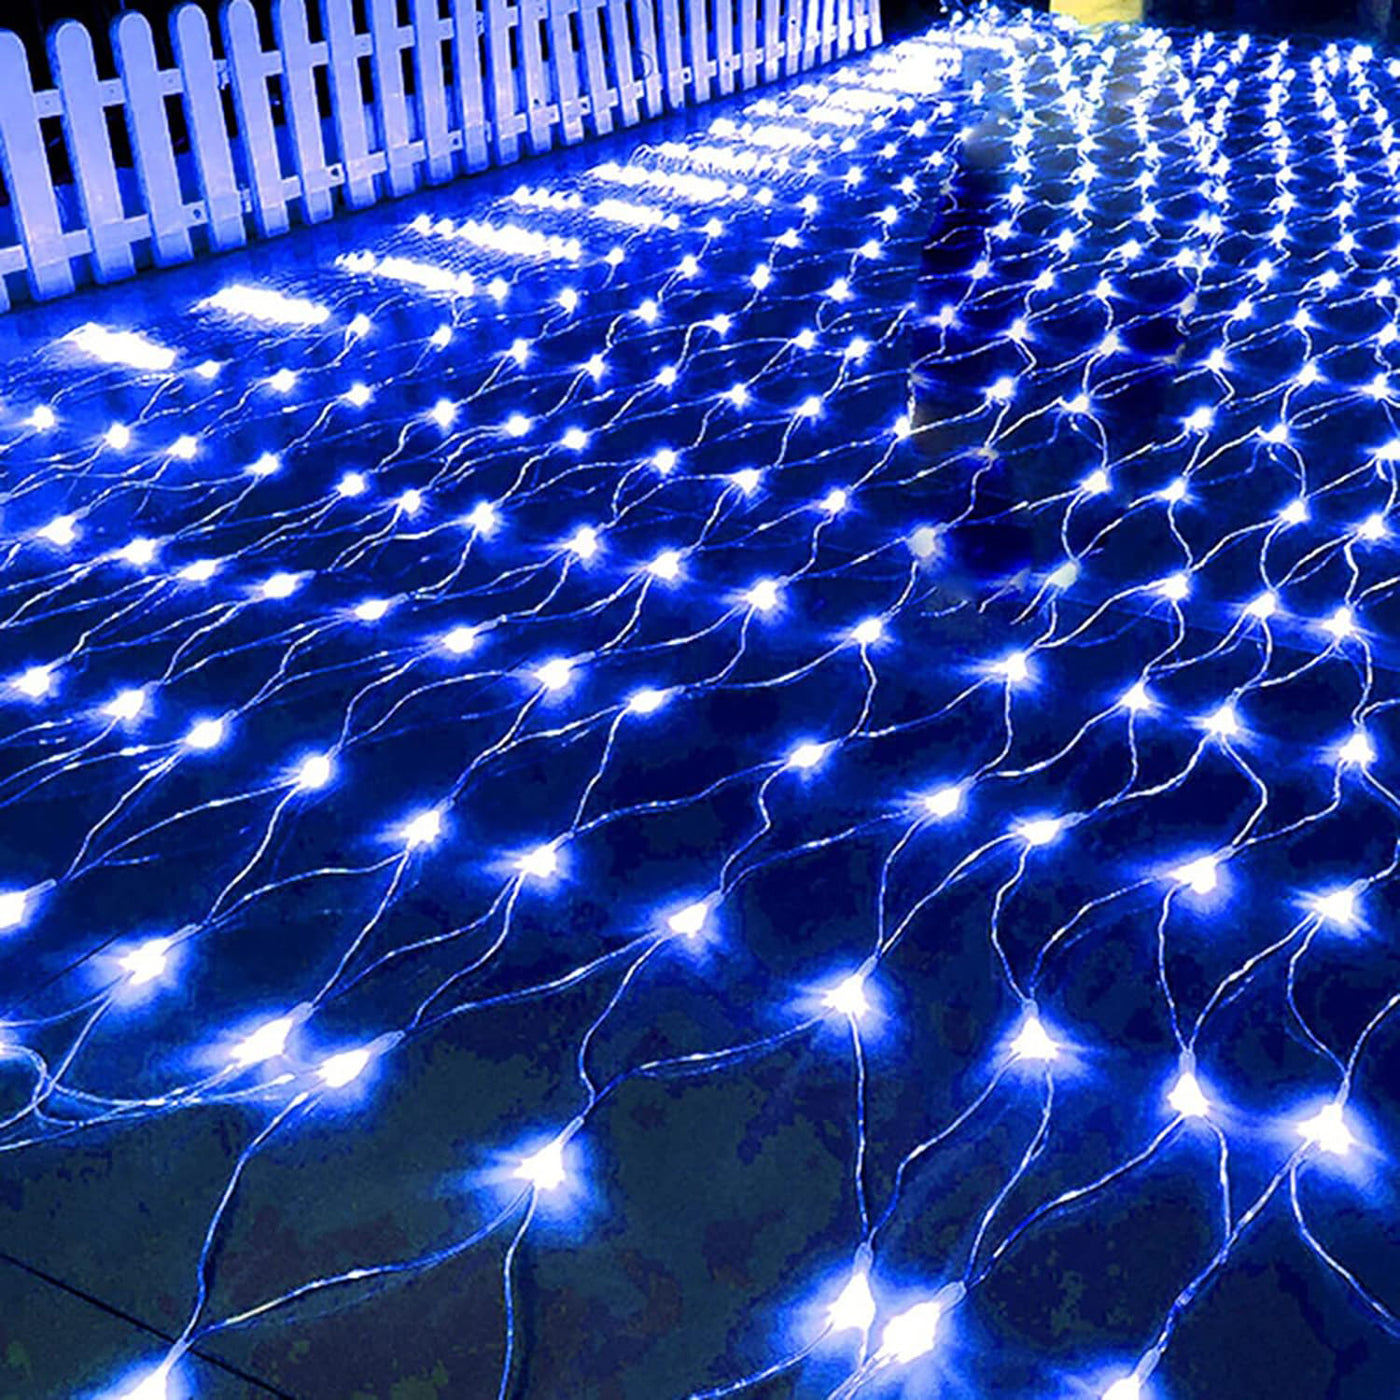 DecorTwist Net/Mesh Fountain Rice Light for Wall Decor| Home Decoration| Diwali Item| Christmas Item| Indoor & Outdoor Decoration Item| | Festival Item | 3 MTR |192 LED Bulb (Blue)